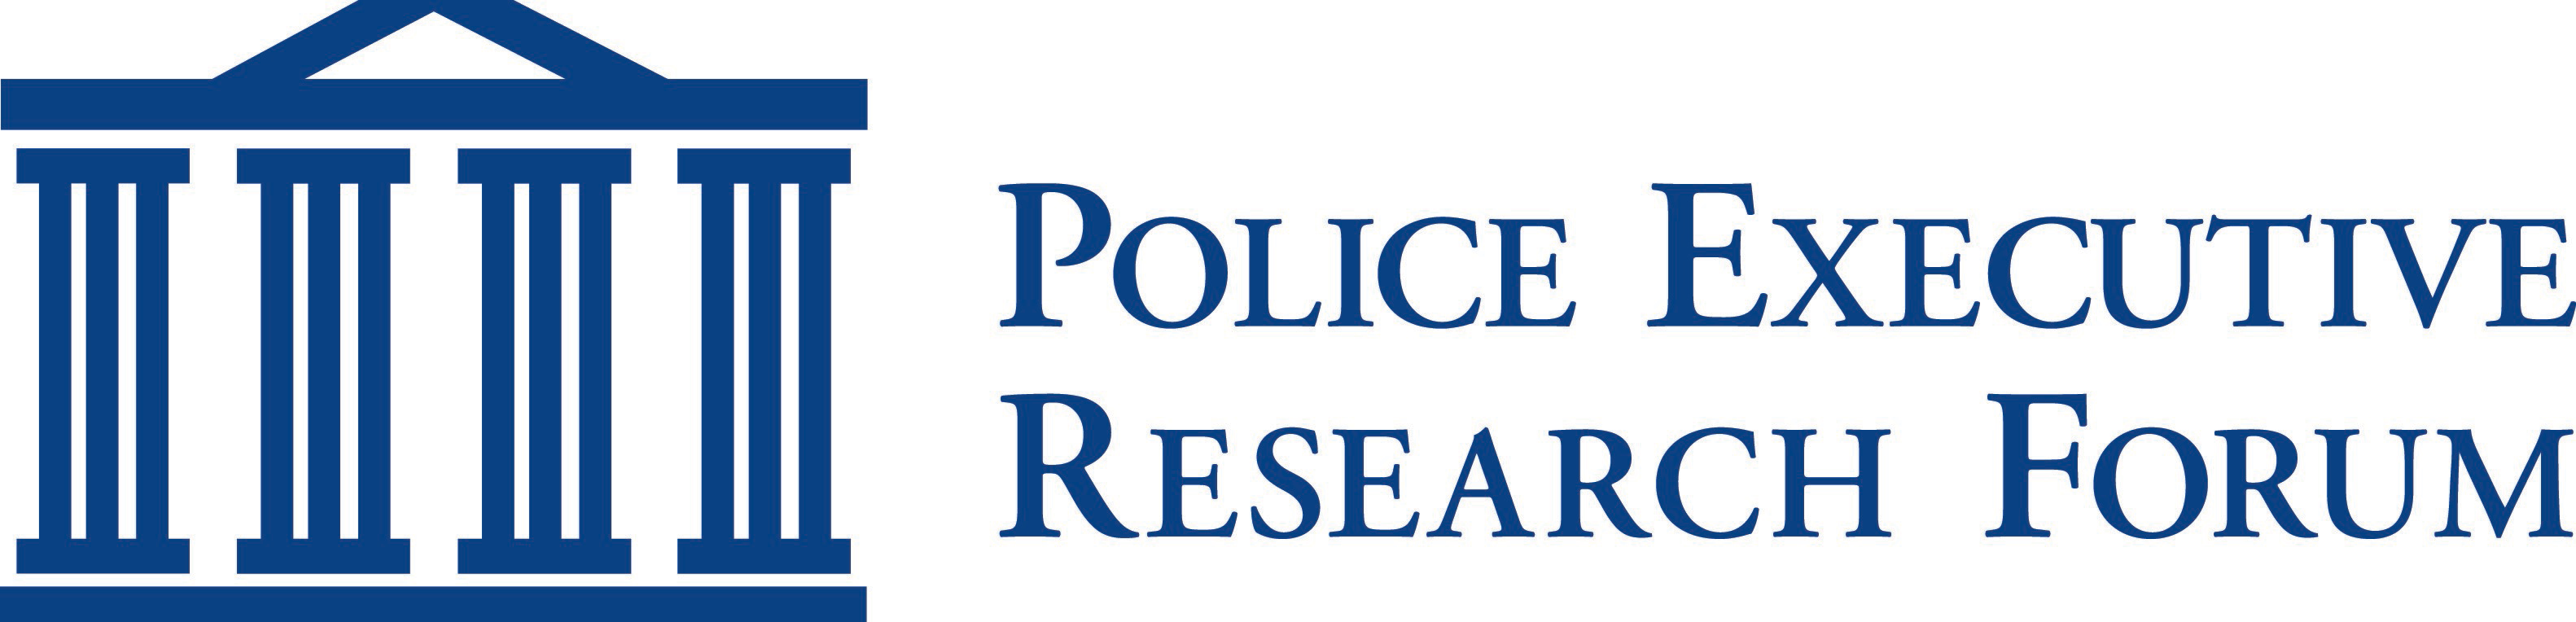 Police Executive Research Forum